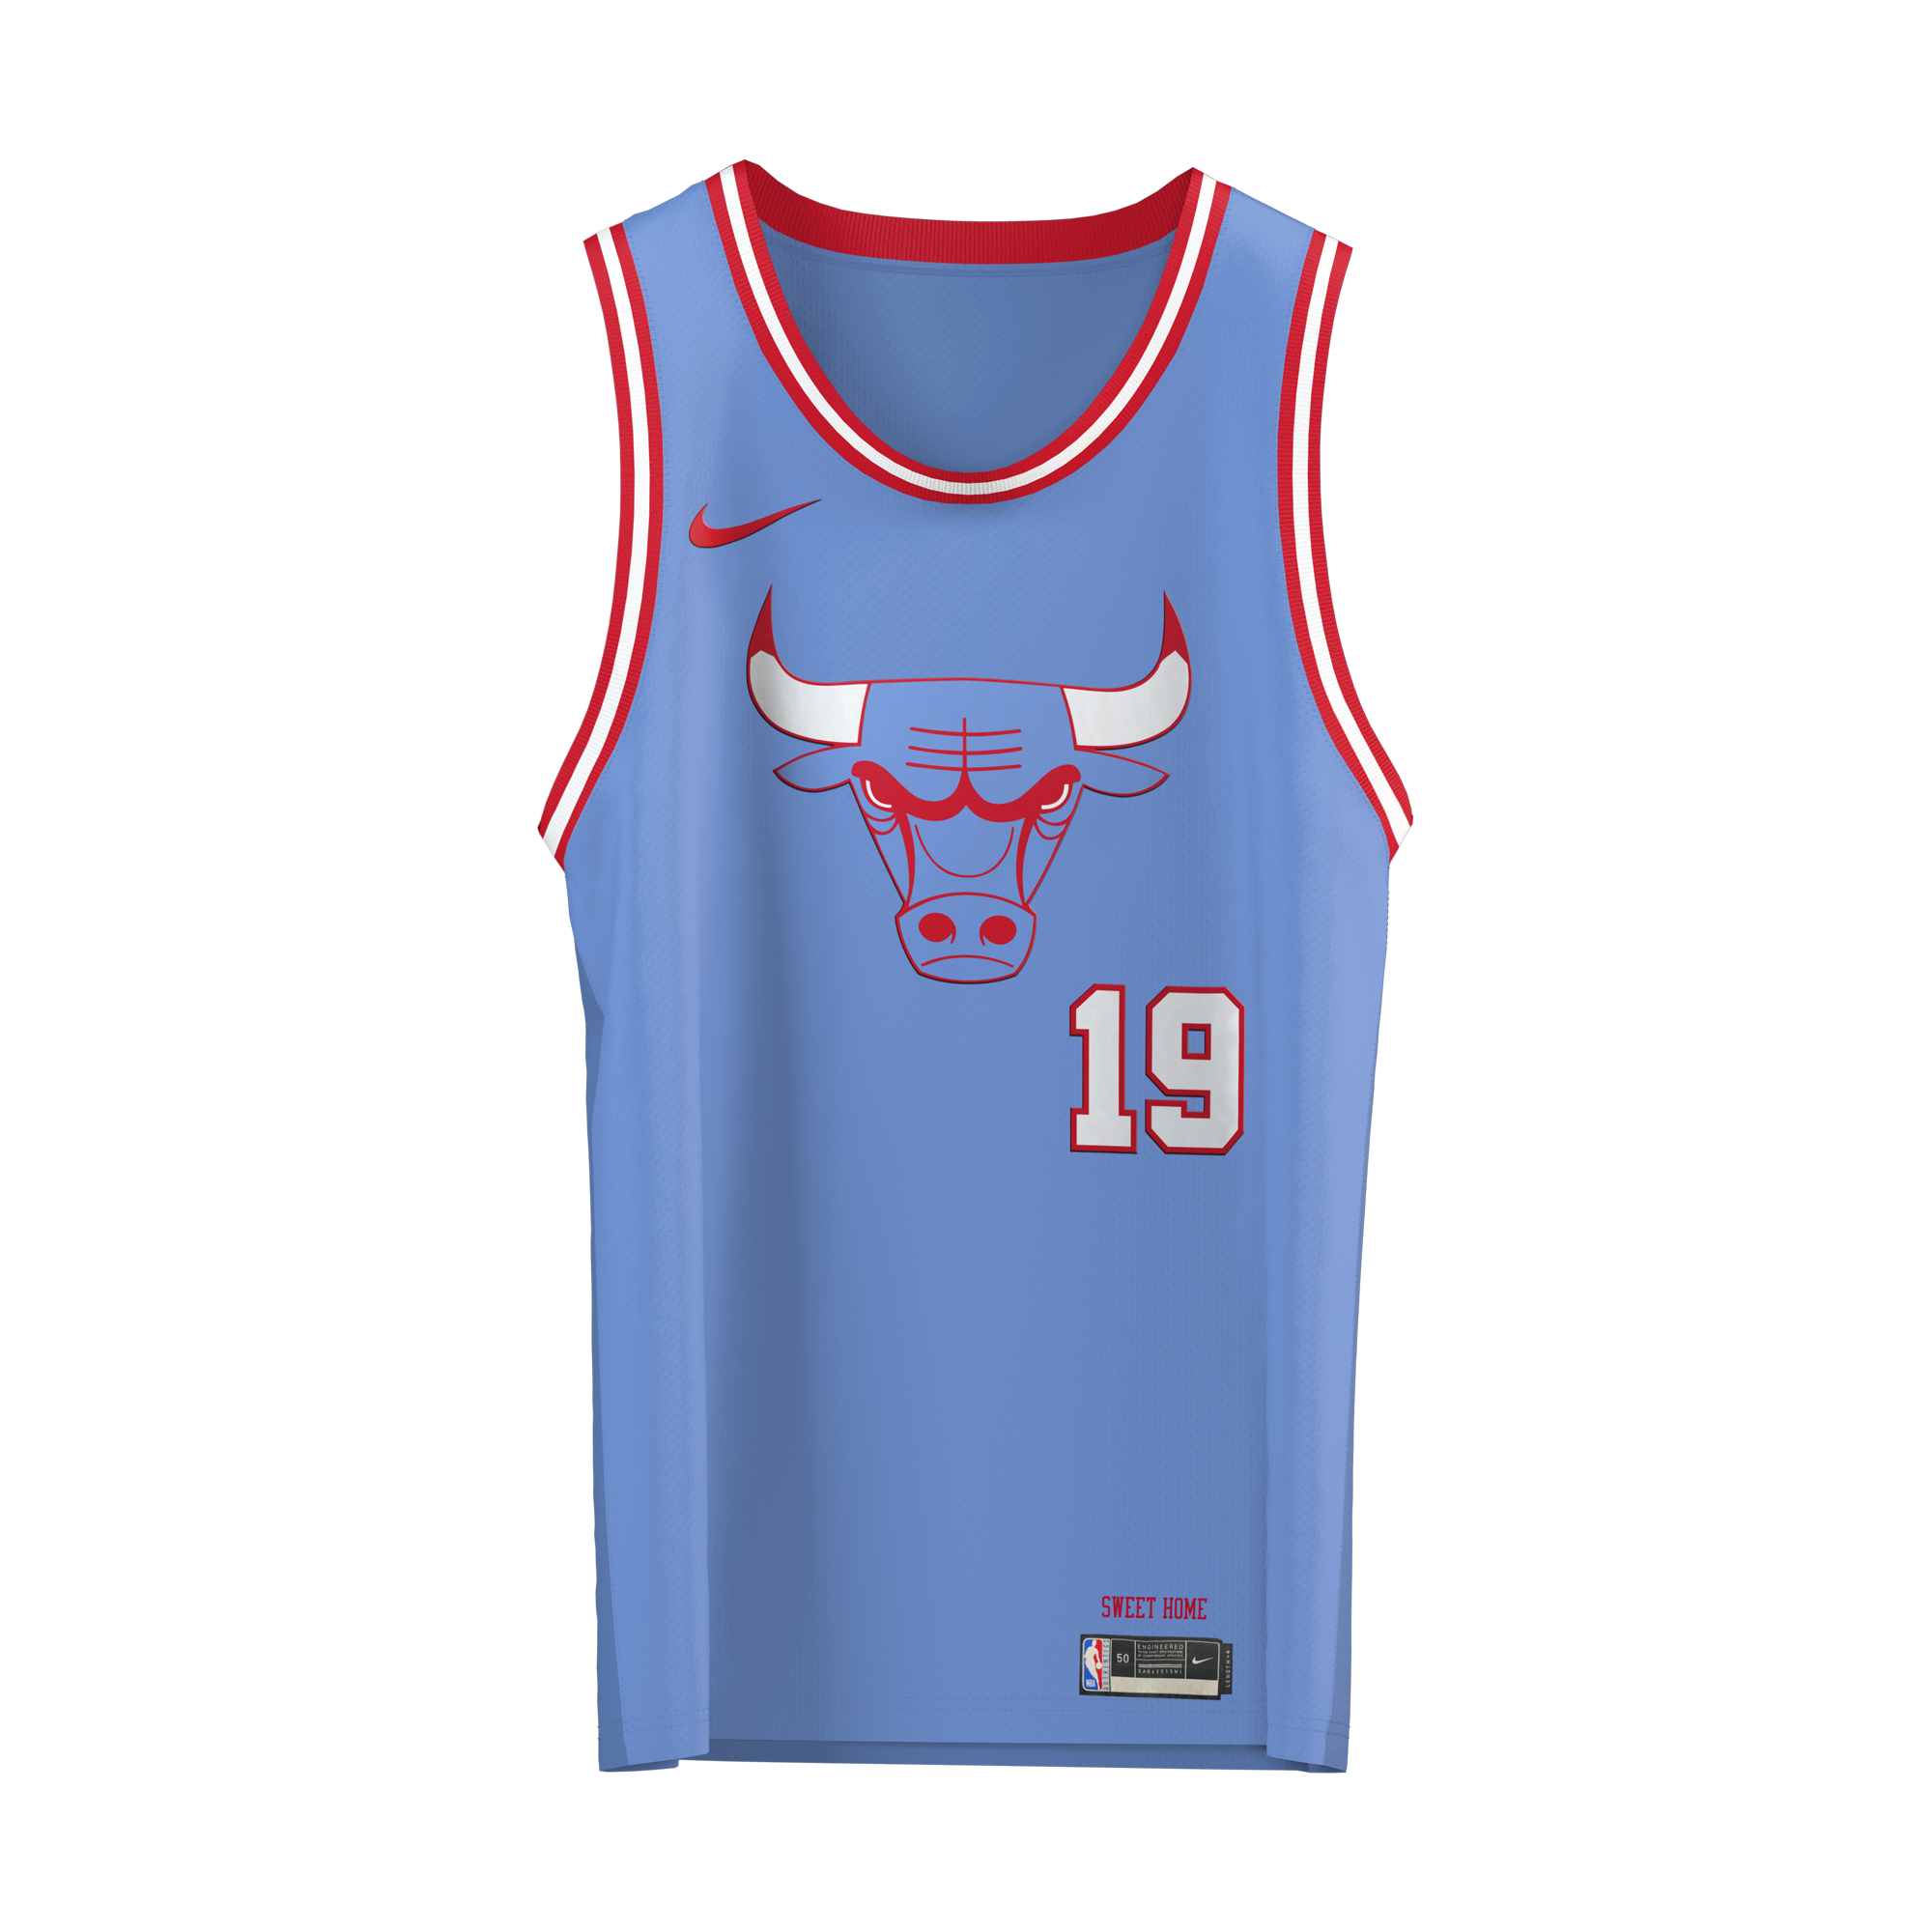 chicago bulls city edition jersey 2017